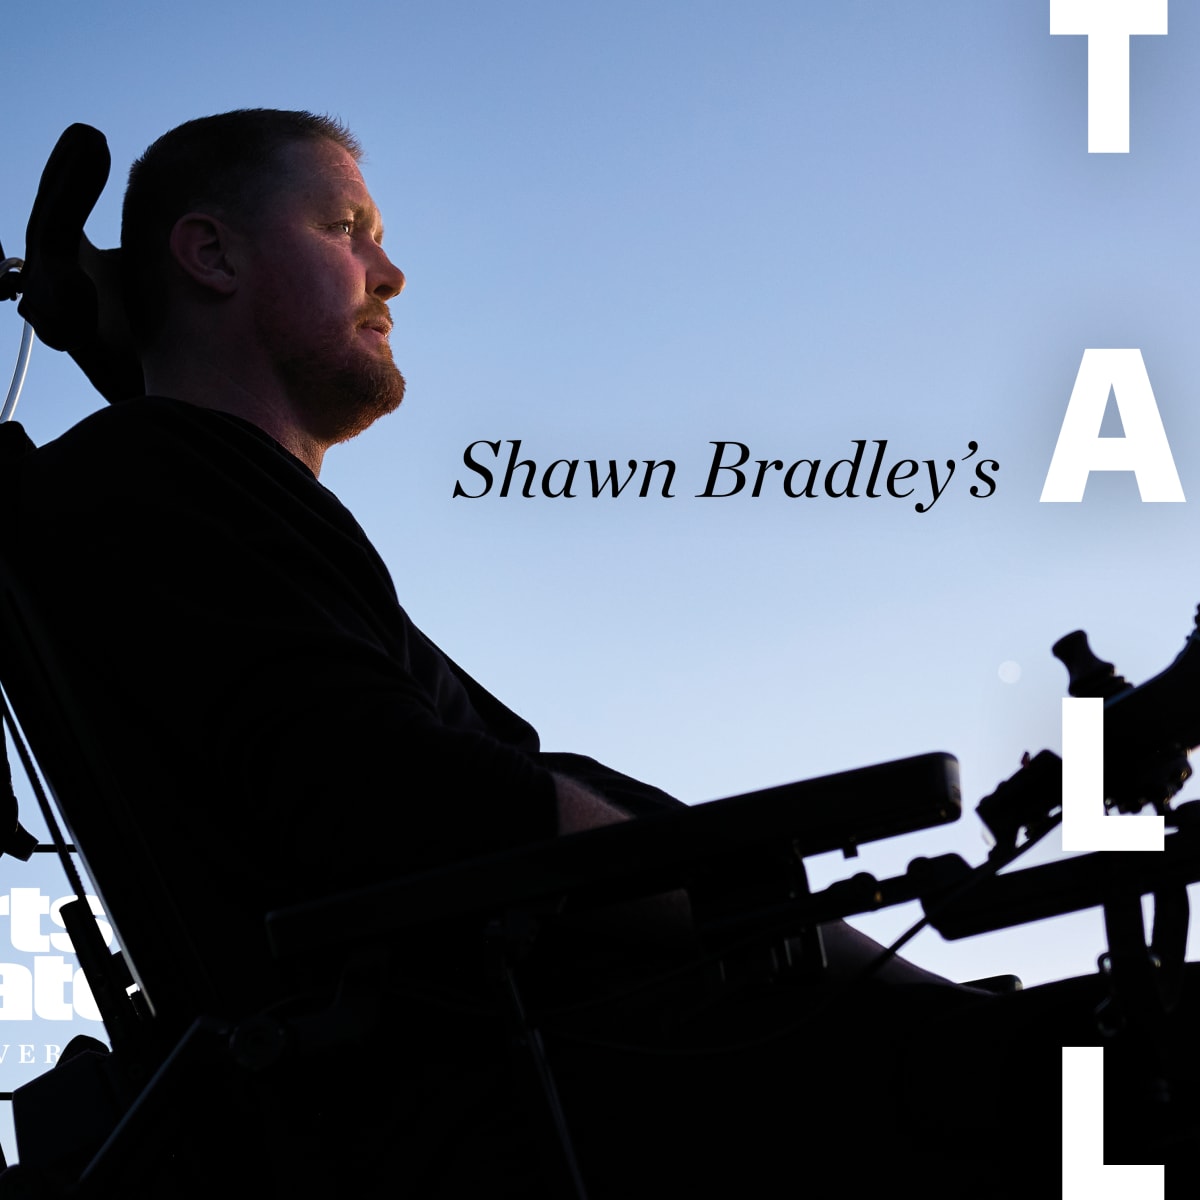 Former NBA player Shawn Bradley paralyzed in Utah bike accident